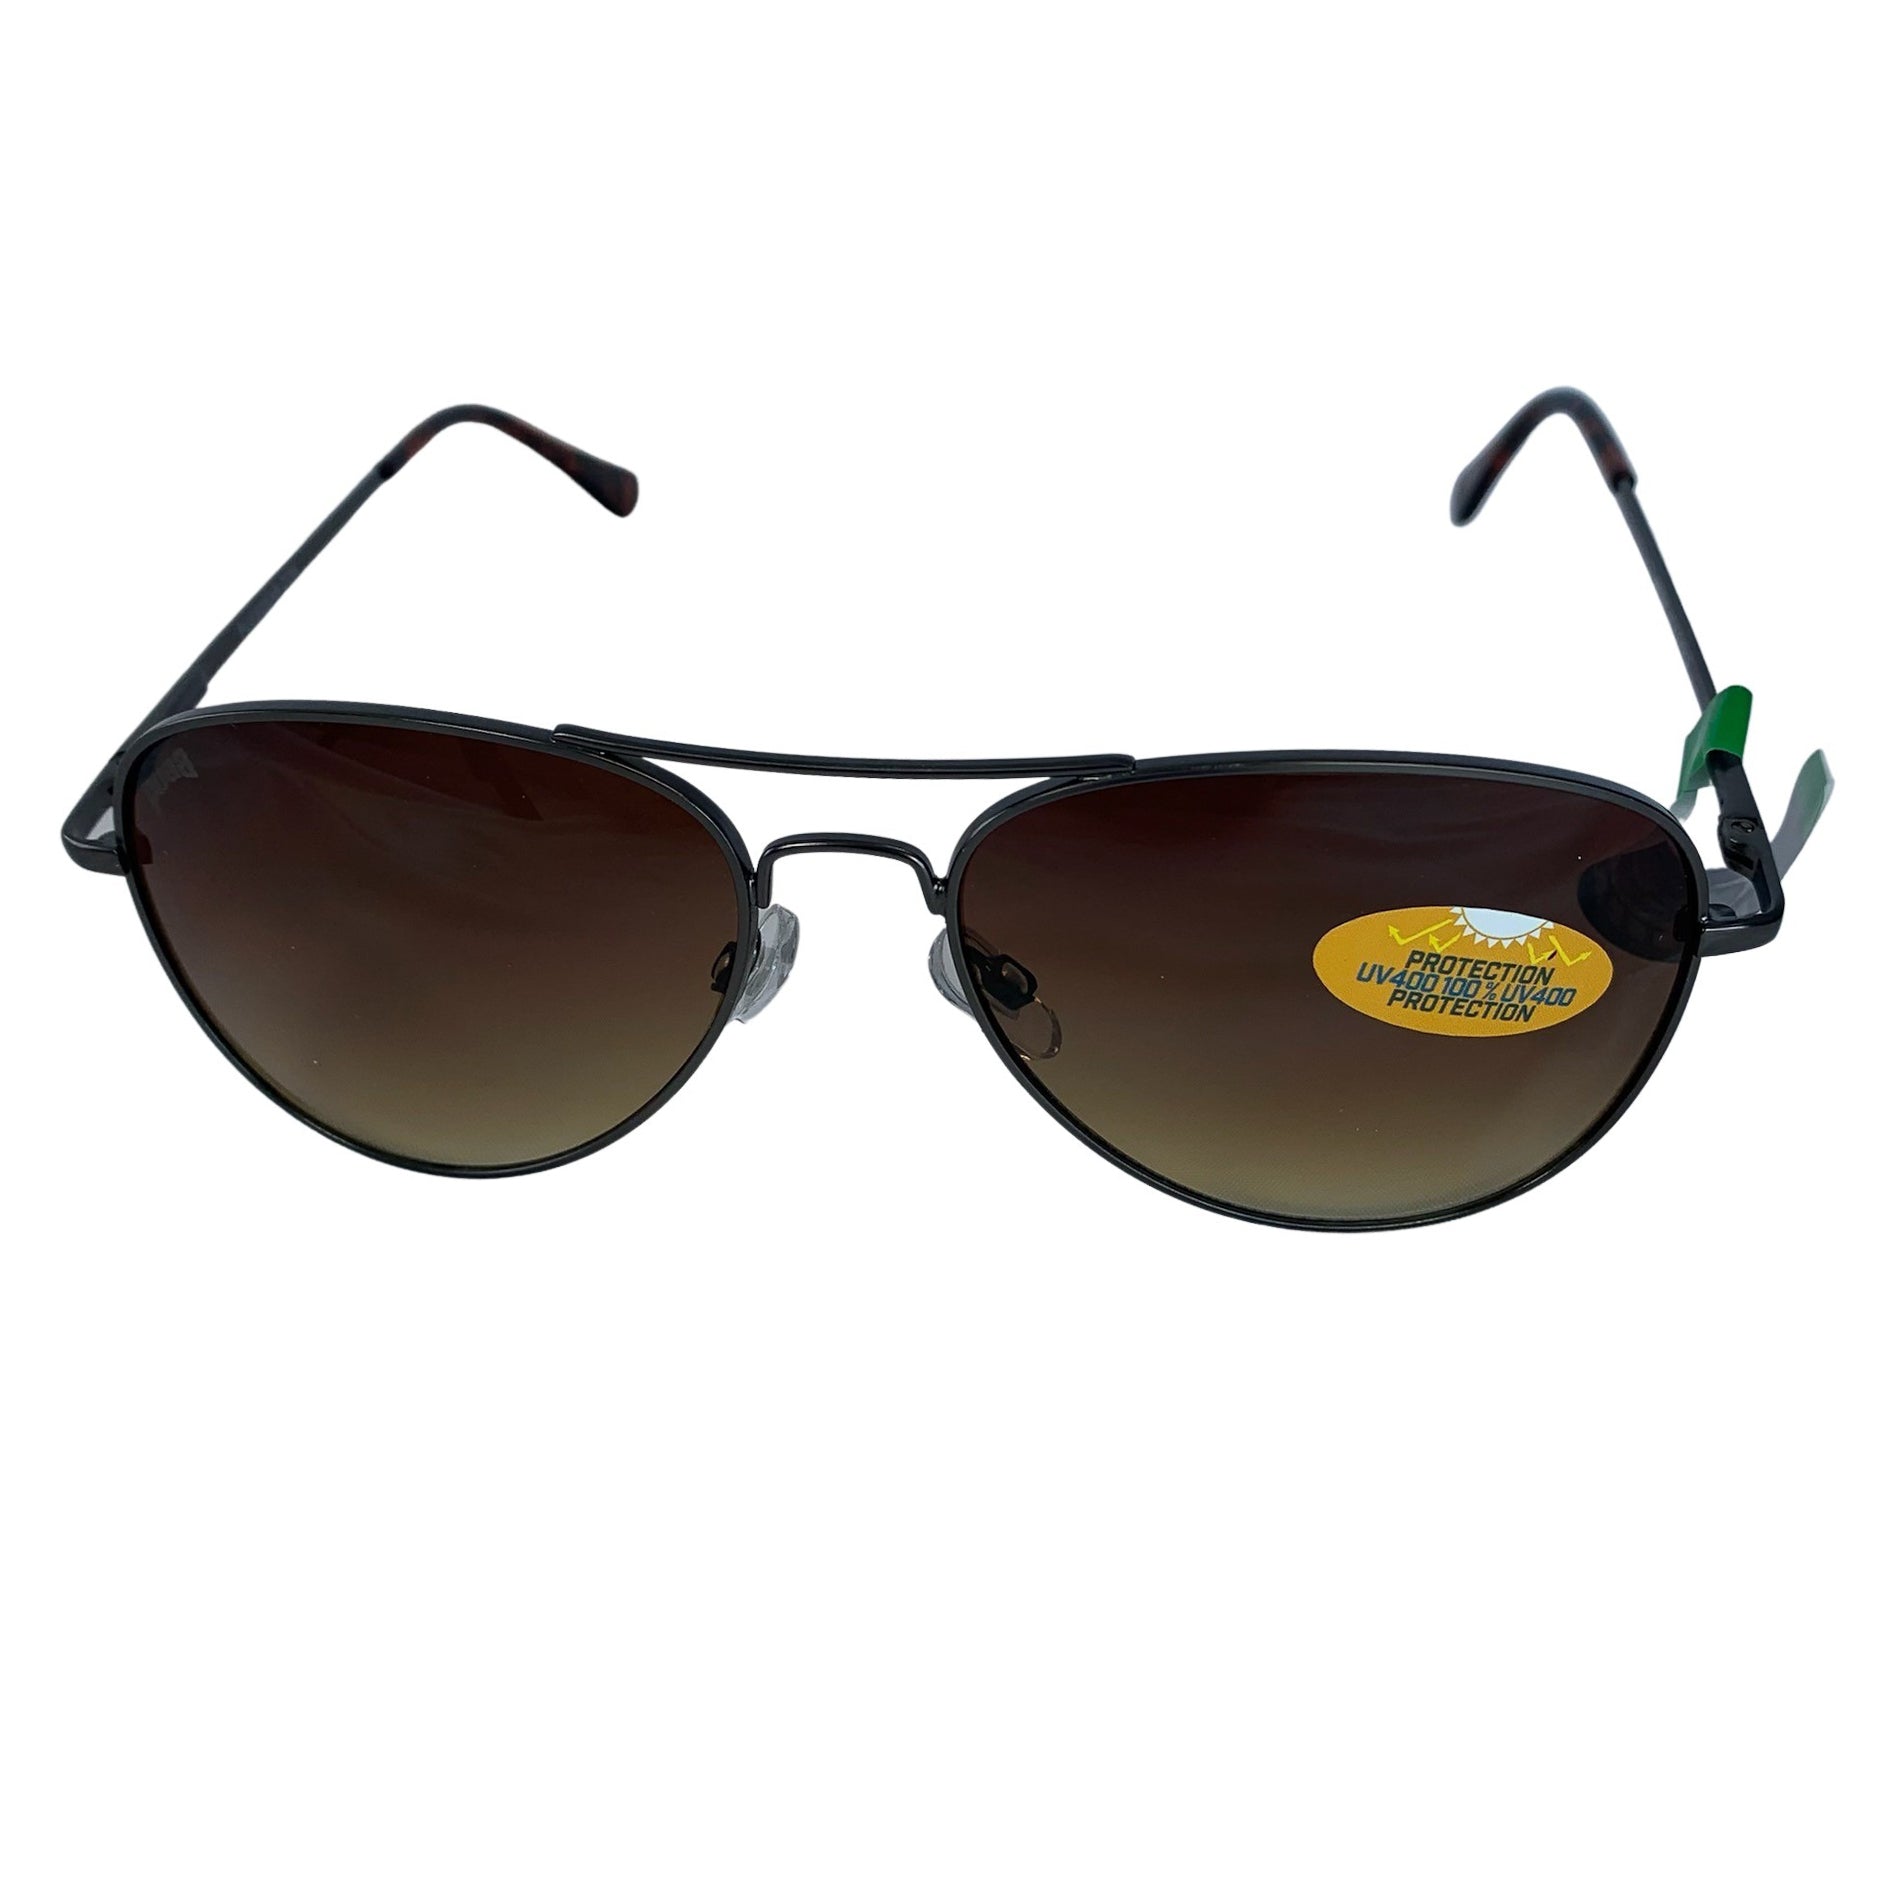 Sunglasses Mens Aviator Pugs assorted srp 19.99 – Aiton Drug Co